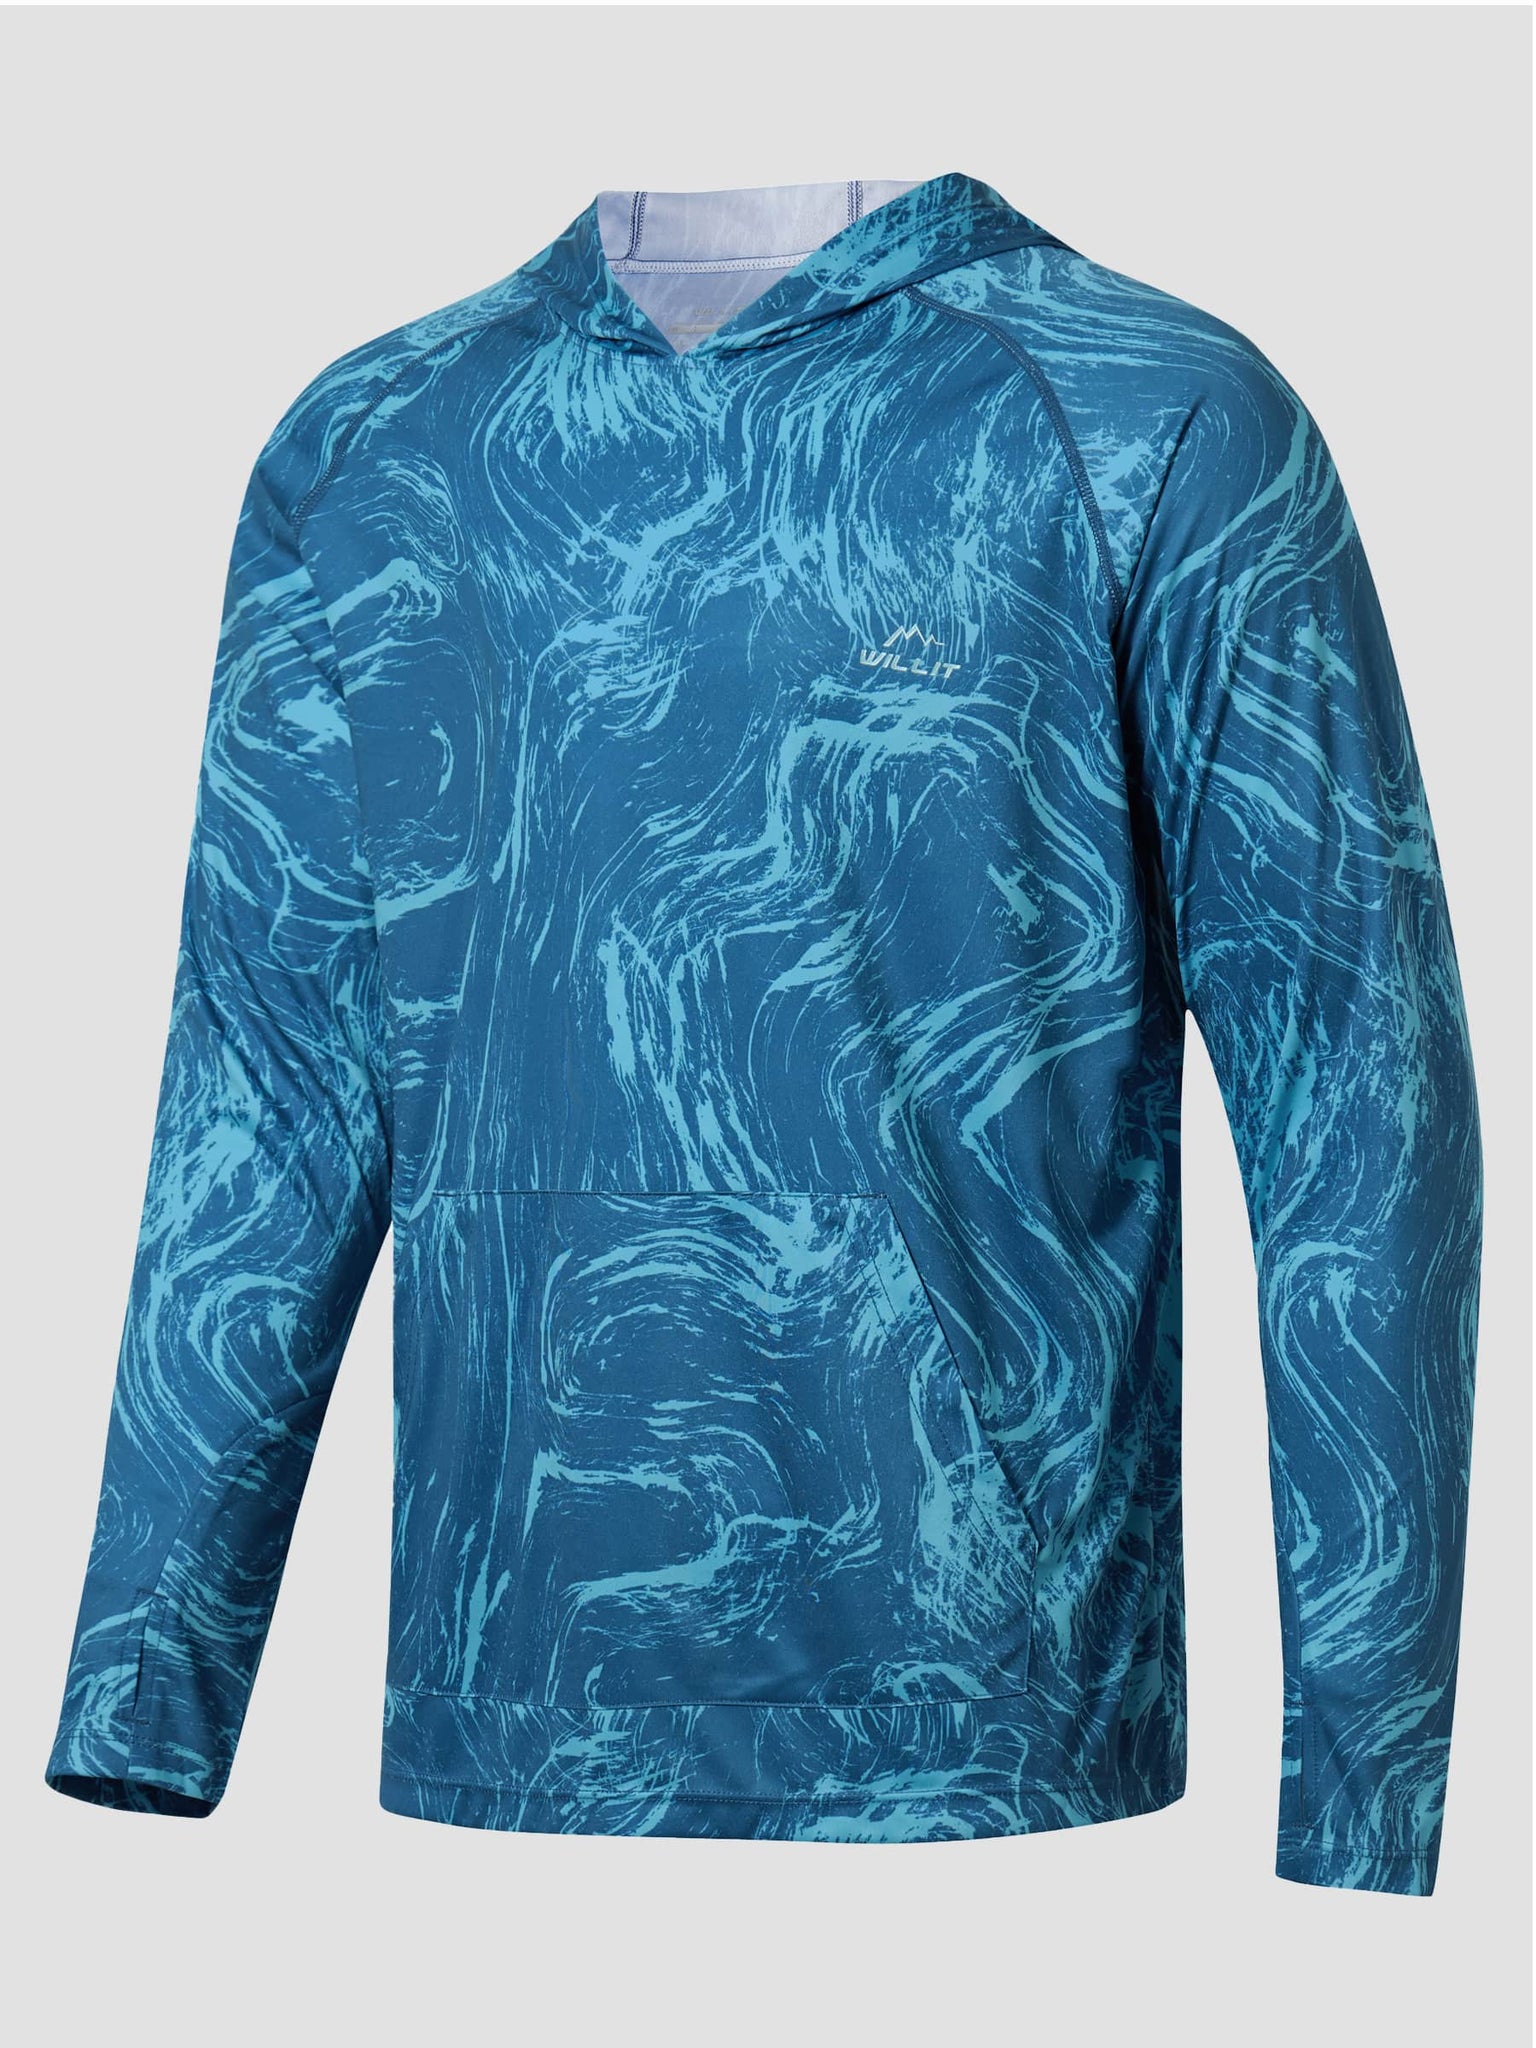 Men's Sun Protection Long Sleeve Shirts_WavePattern_model1